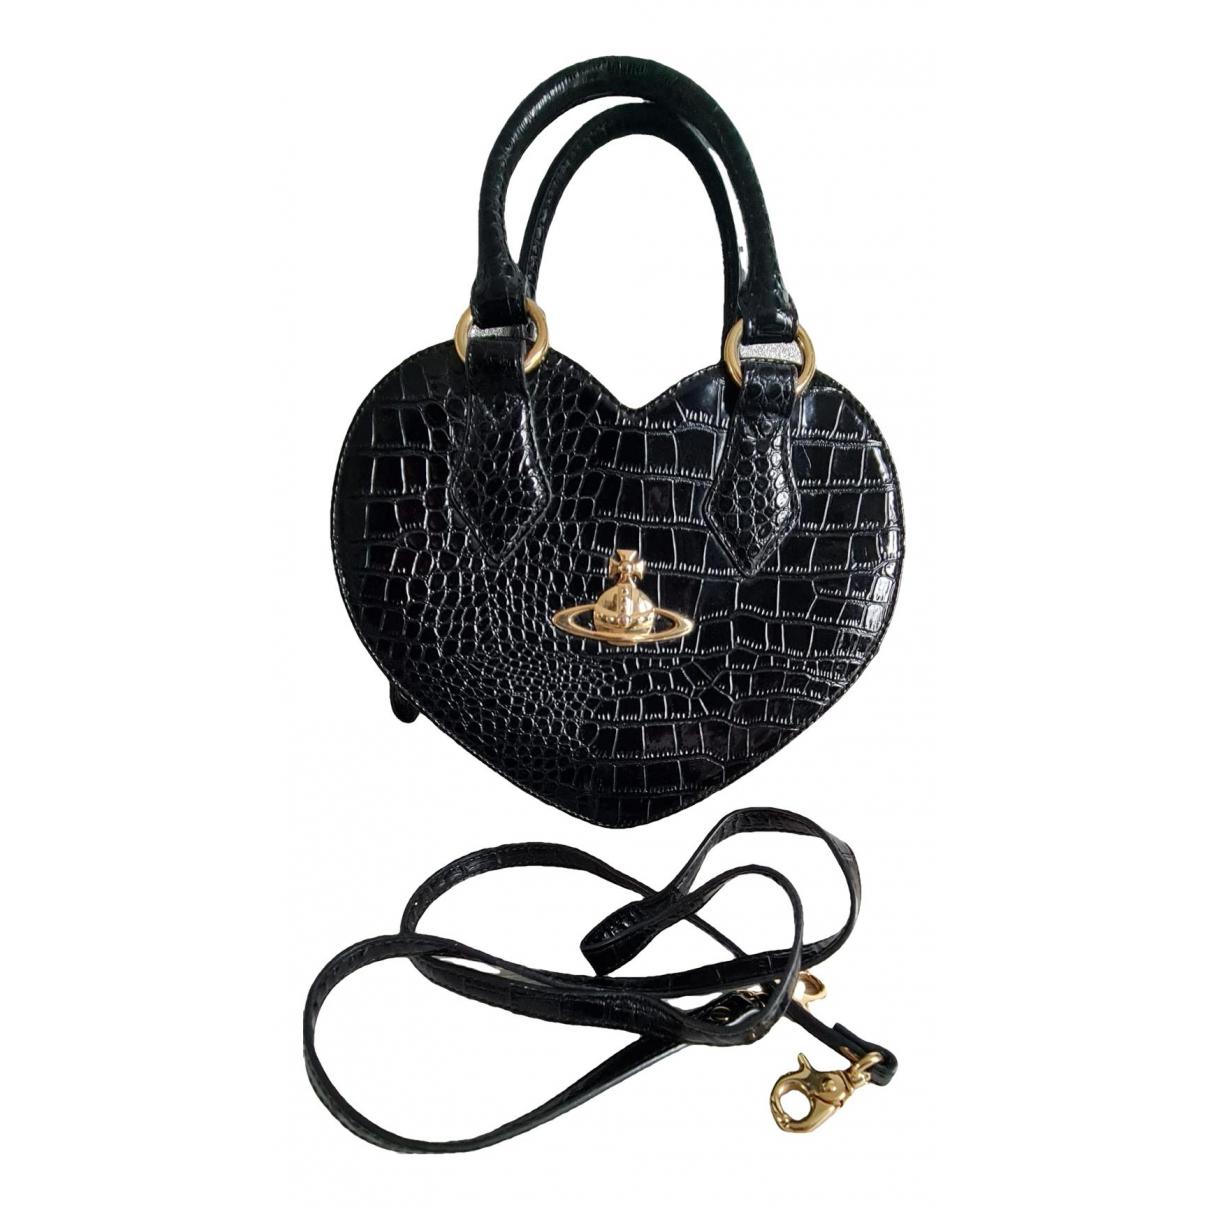 Vivienne Westwood Heart Bag Chancery Black With Big Gold Orb 